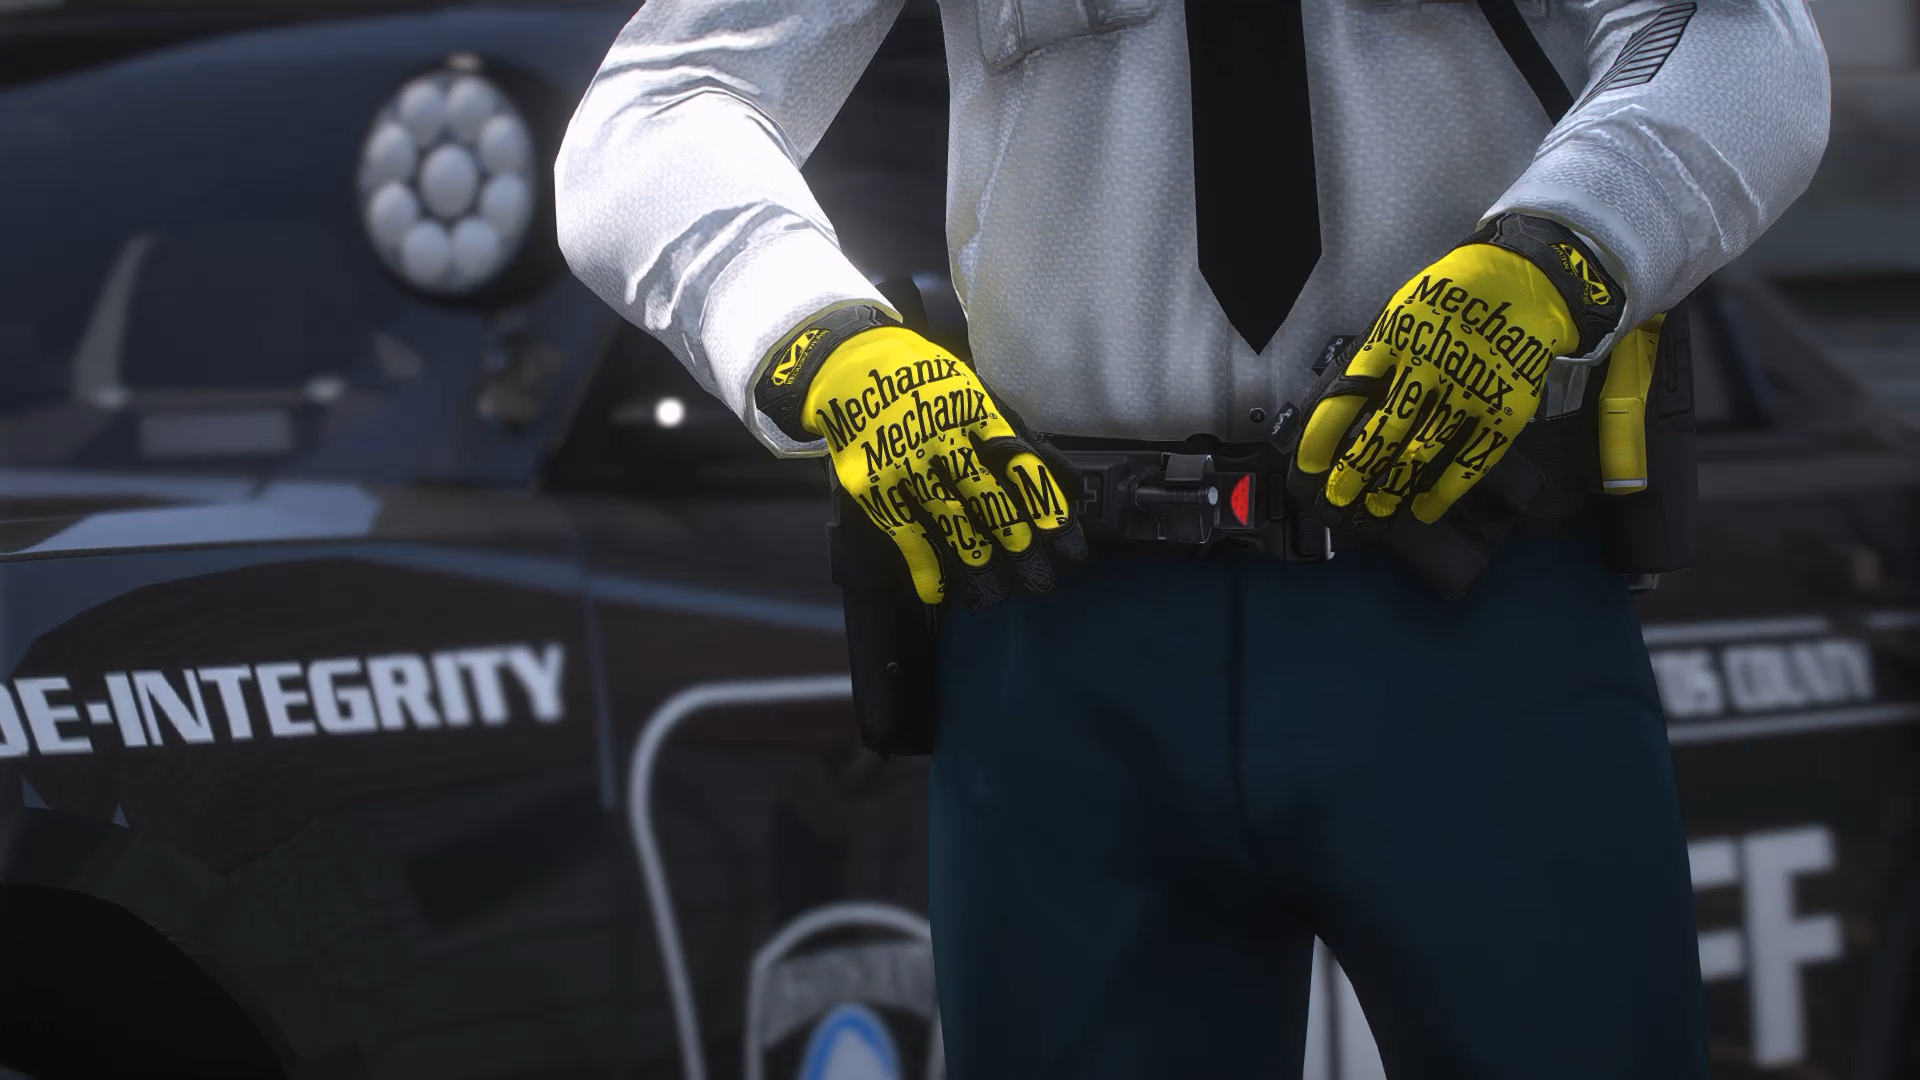 Mechanix Gloves: The Original – ThinLineSanctuary